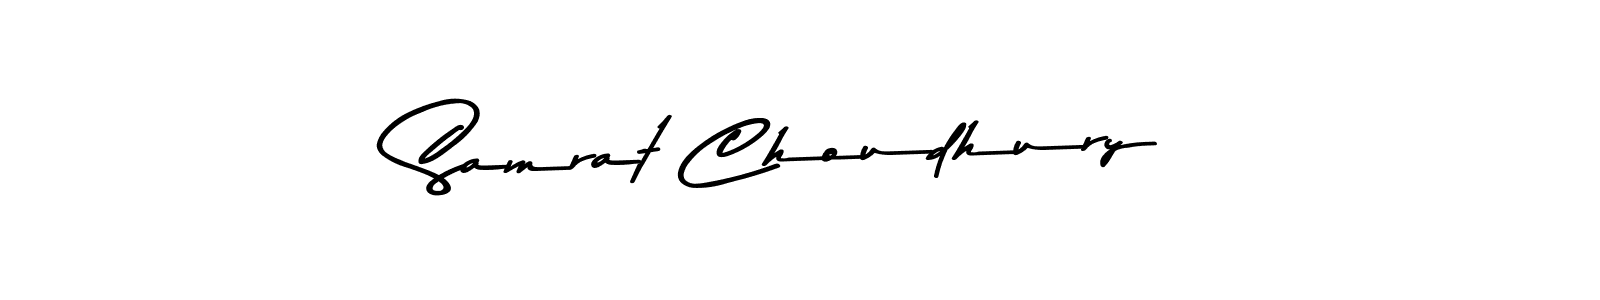 How to Draw Samrat Choudhury signature style? Asem Kandis PERSONAL USE is a latest design signature styles for name Samrat Choudhury. Samrat Choudhury signature style 9 images and pictures png